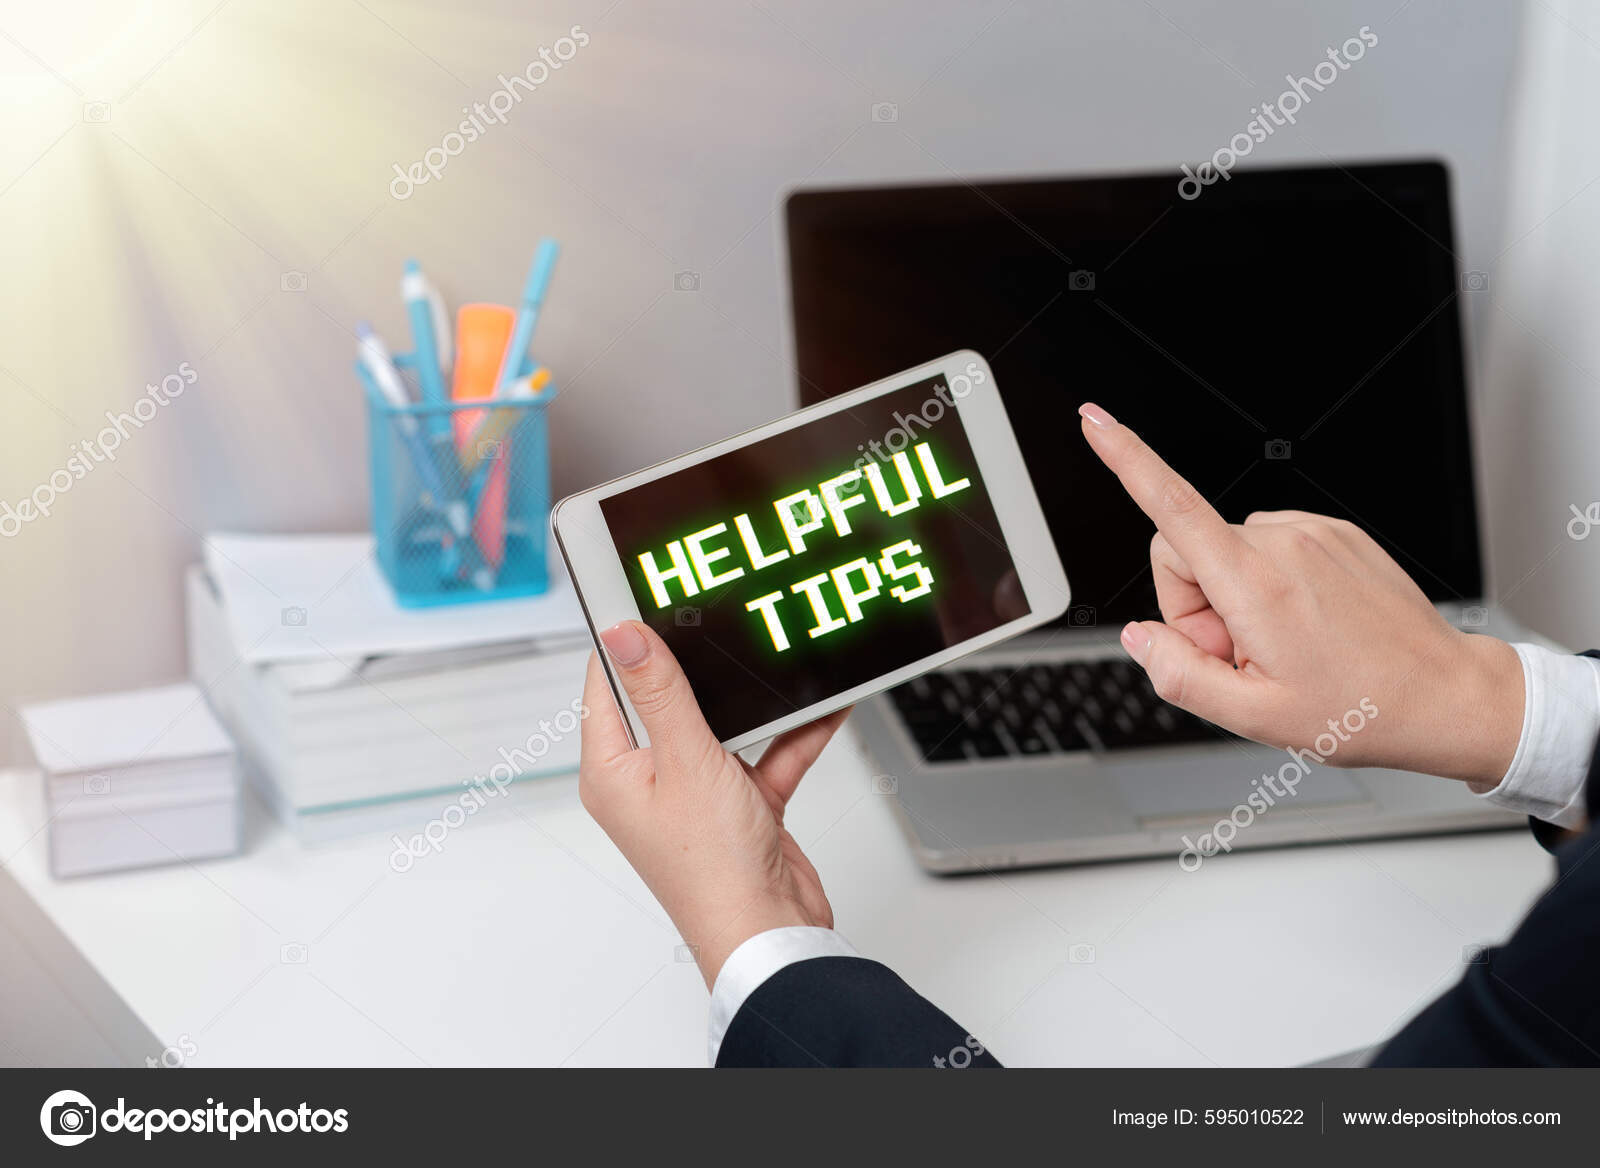 Information Display Tips